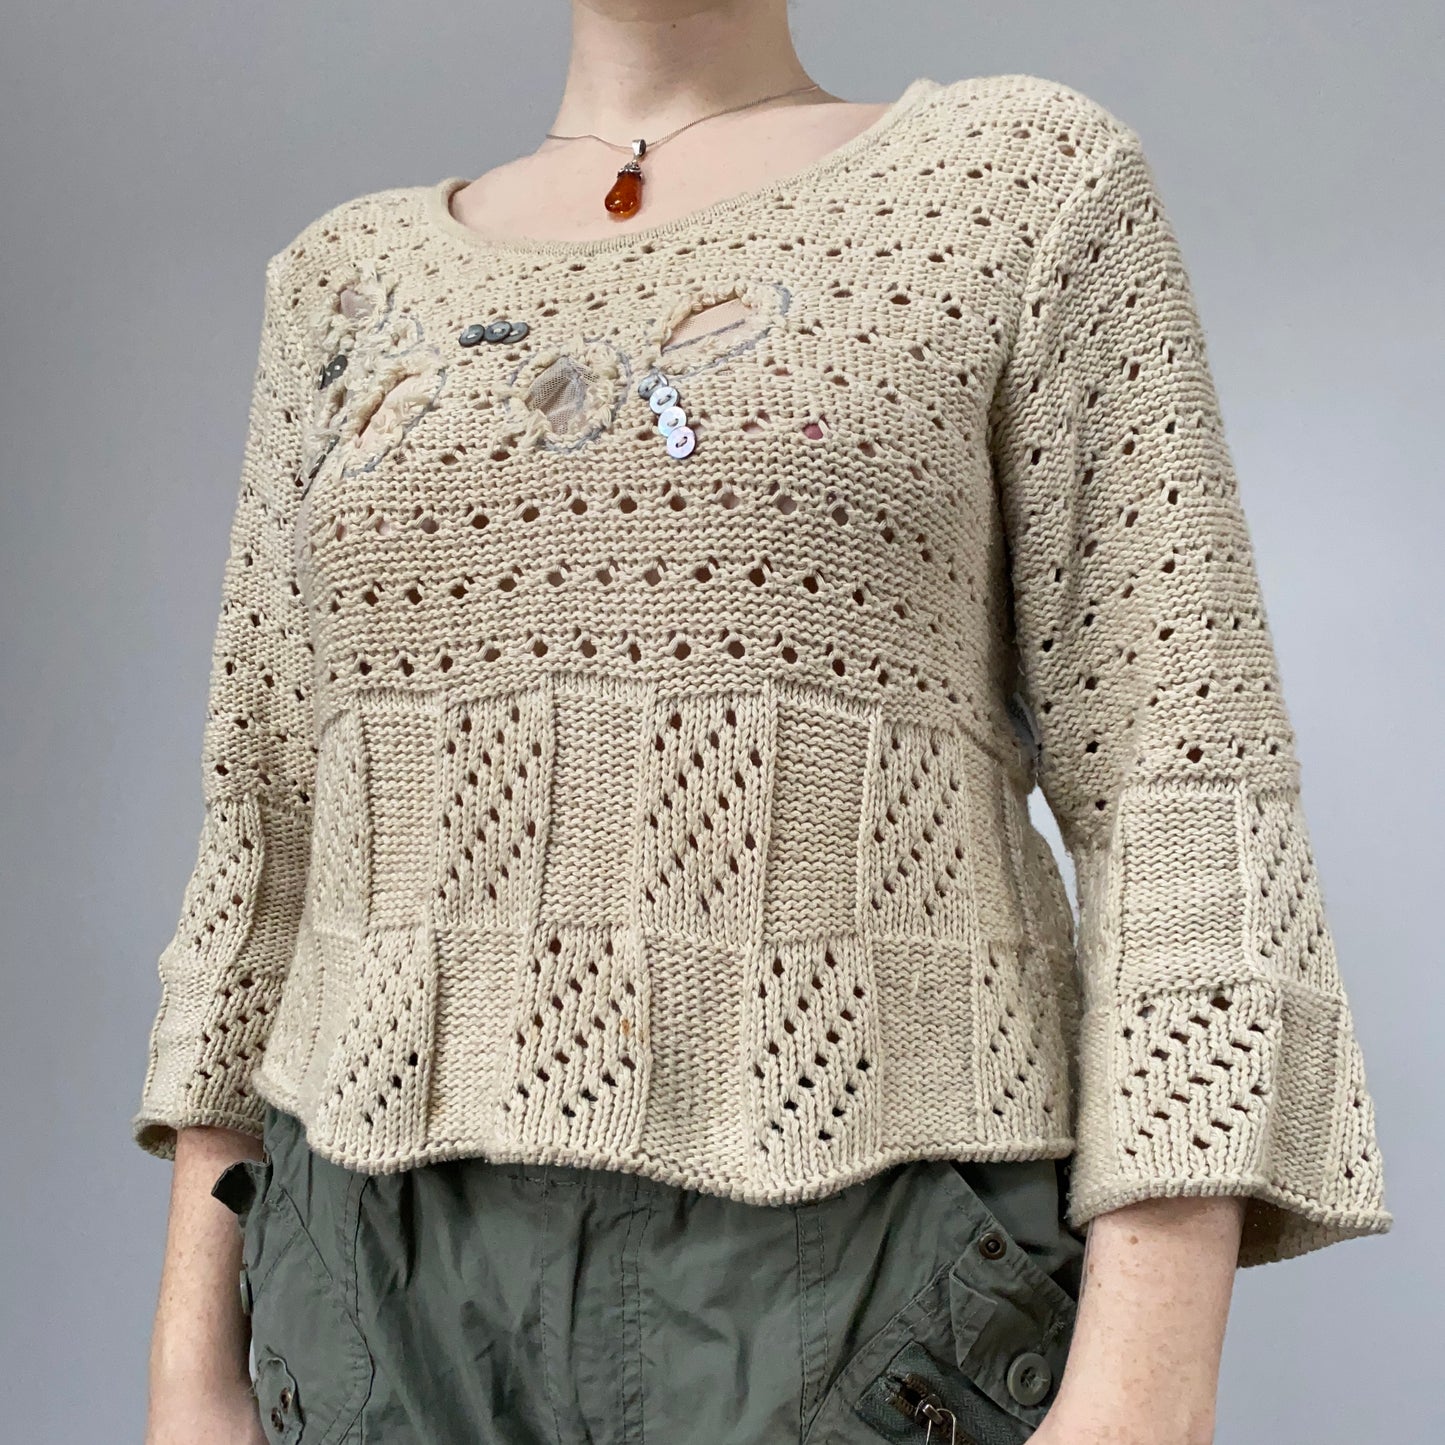 Cream knit top - size M